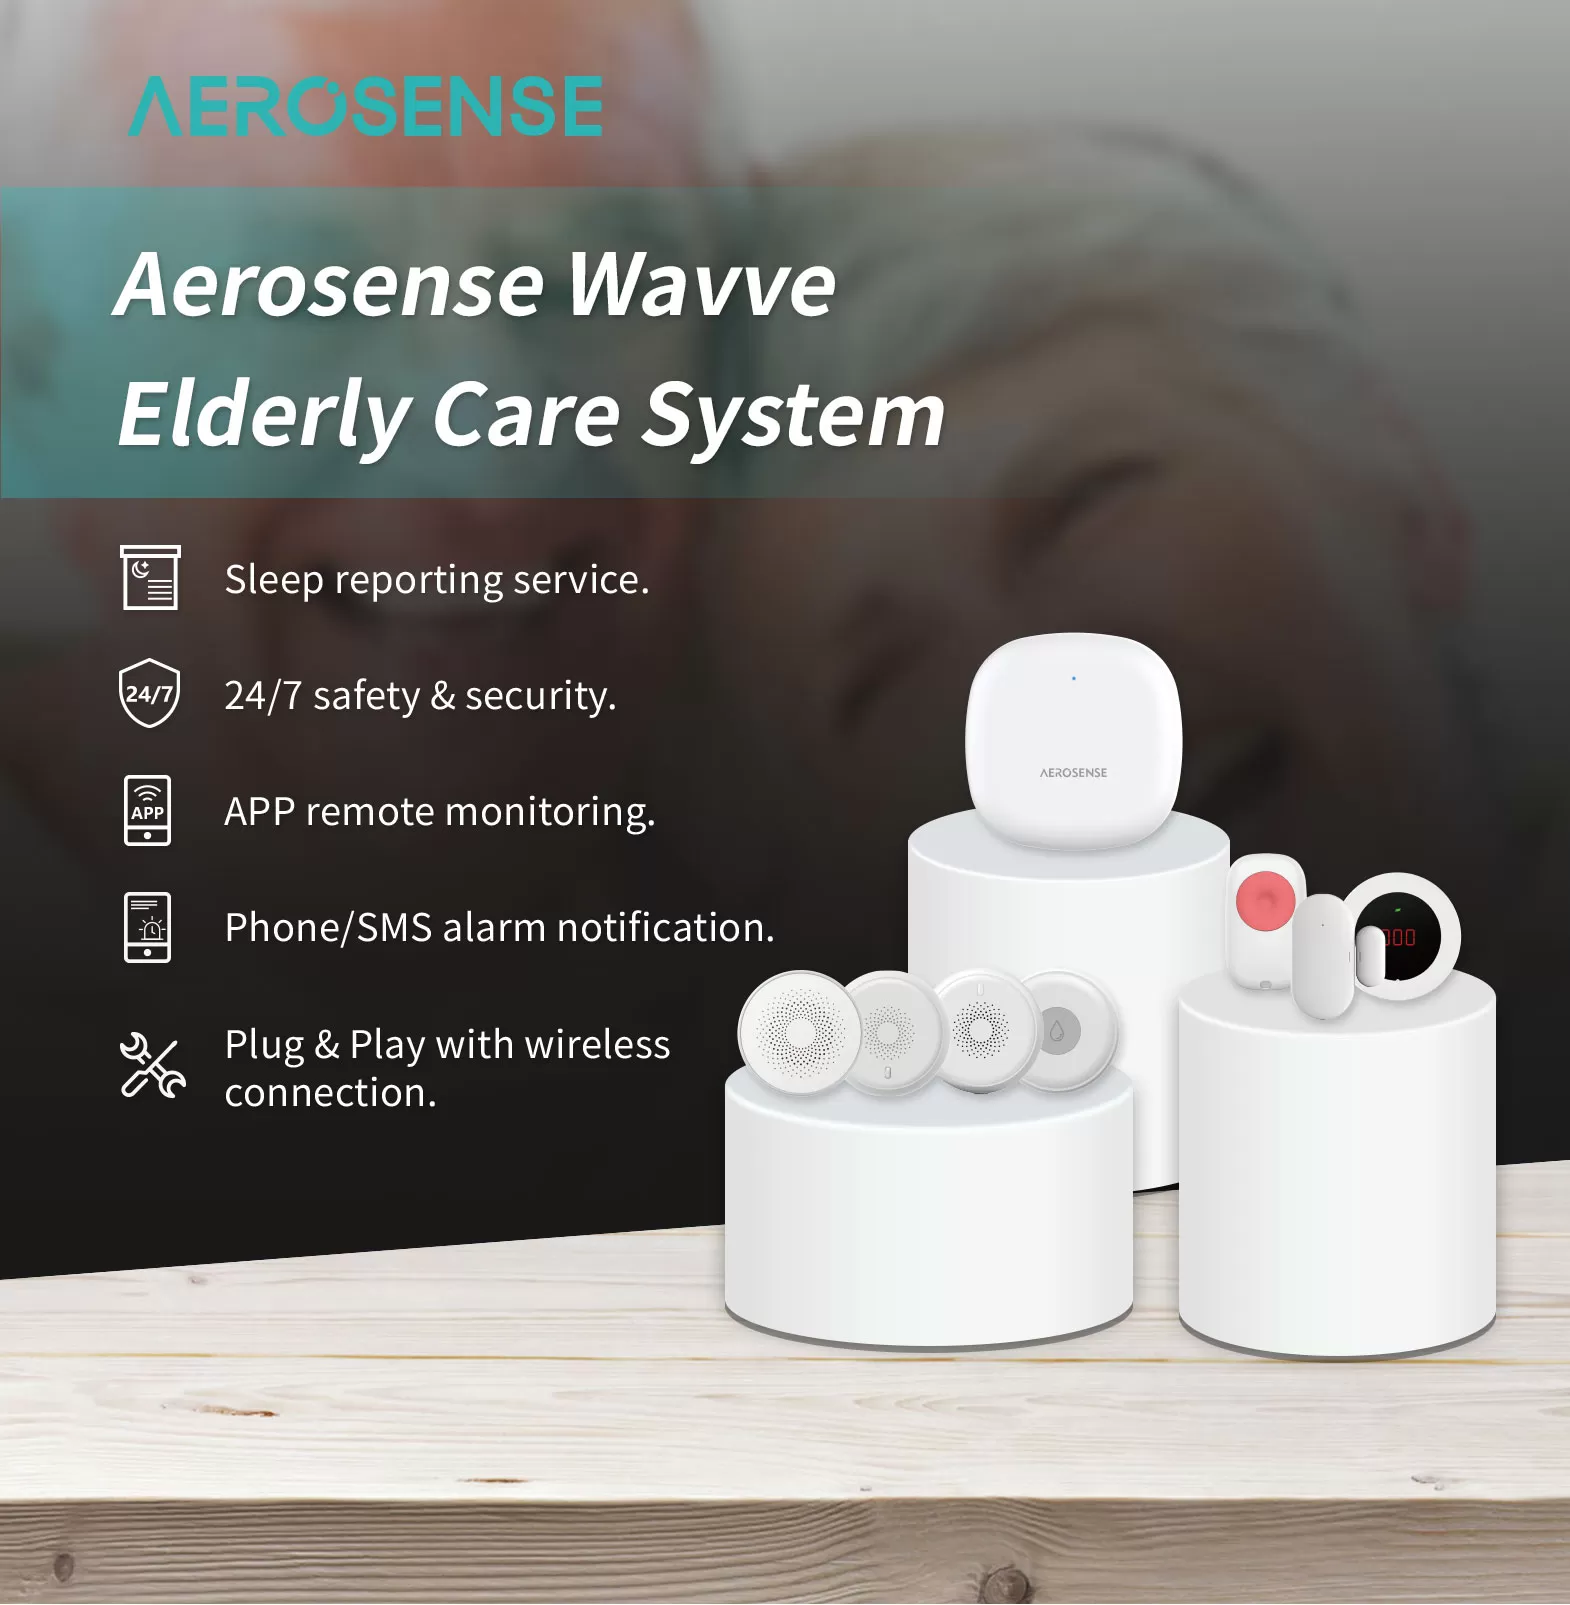 Aerosense Wavve Elderly Care System - Elderly Care - 1